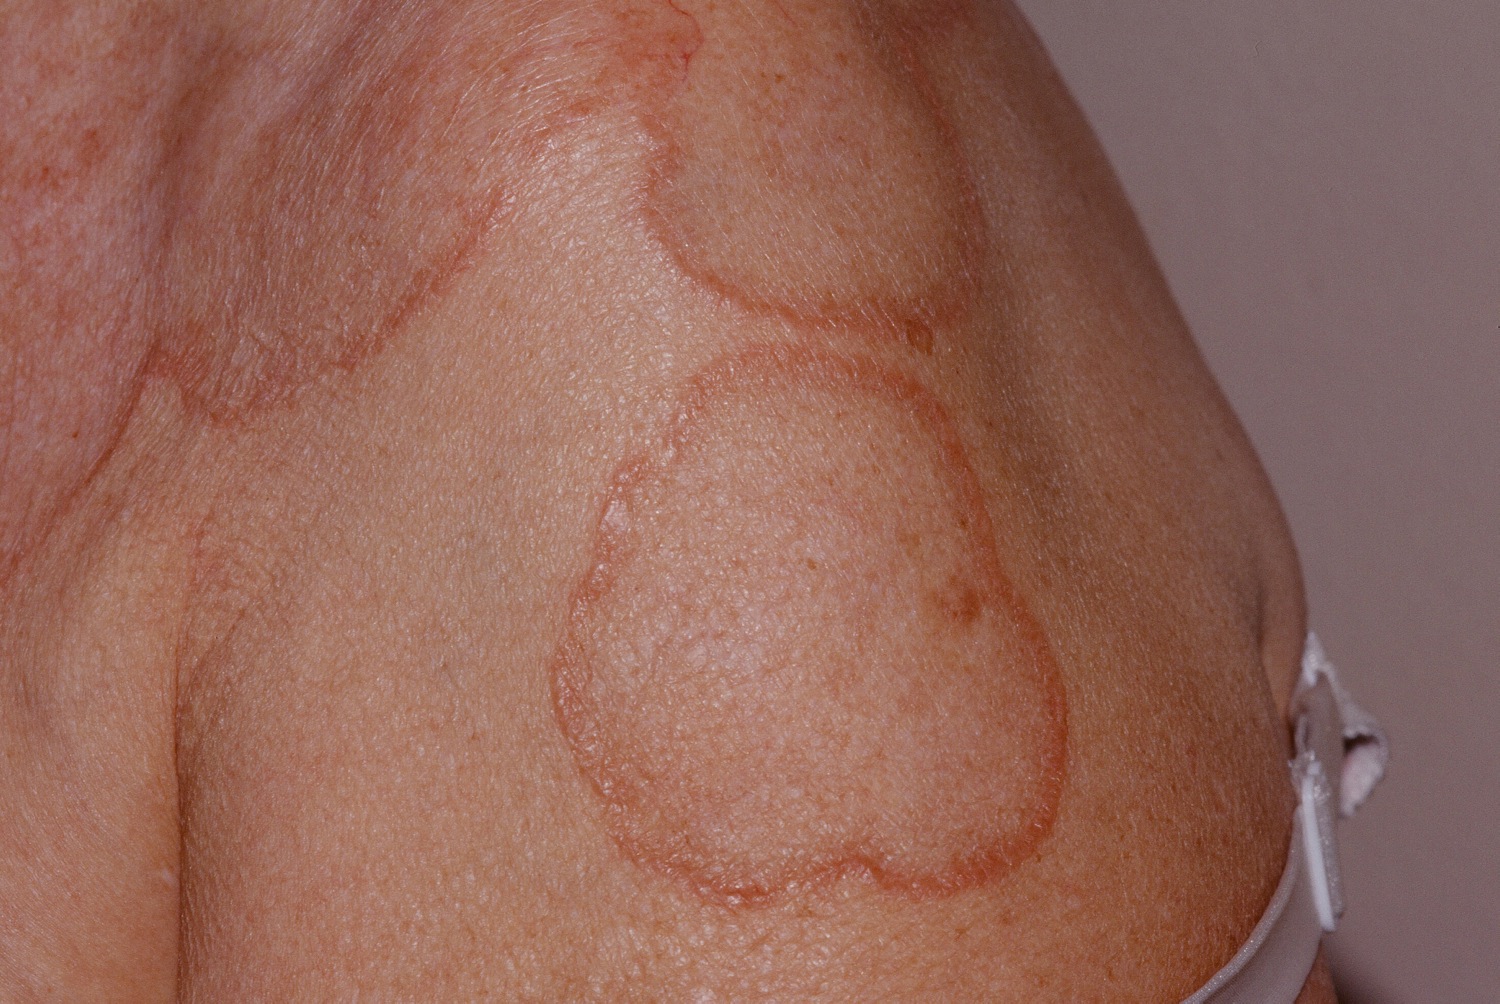 granuloma-annulare-causes-rash-treatment